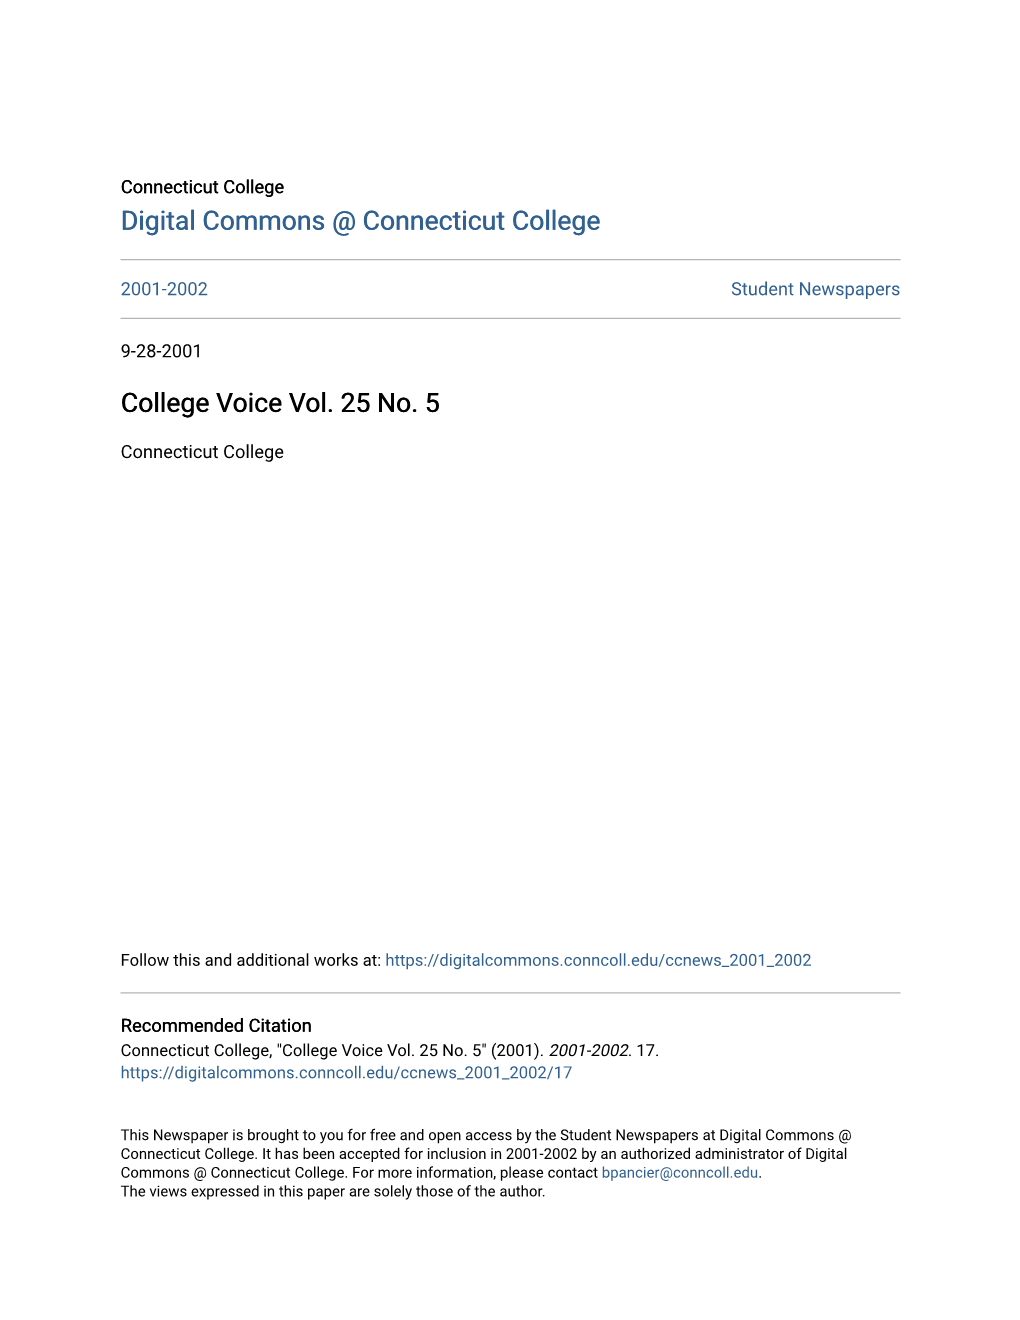 College Voice Vol. 25 No. 5